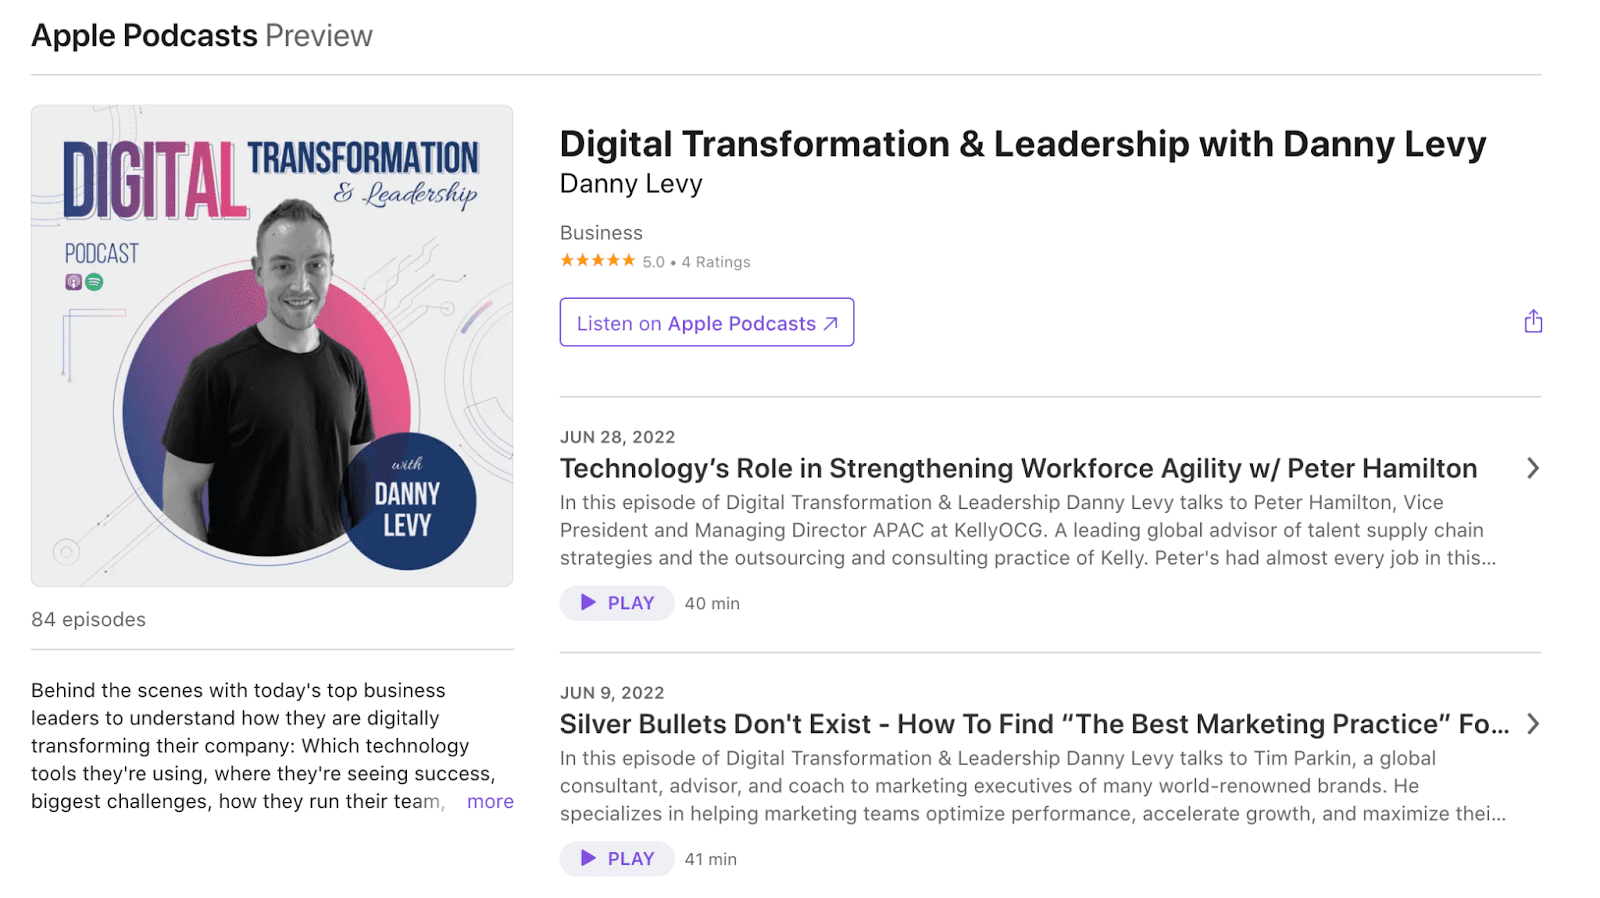 Digital Transformation & Leadership with Danny Levy